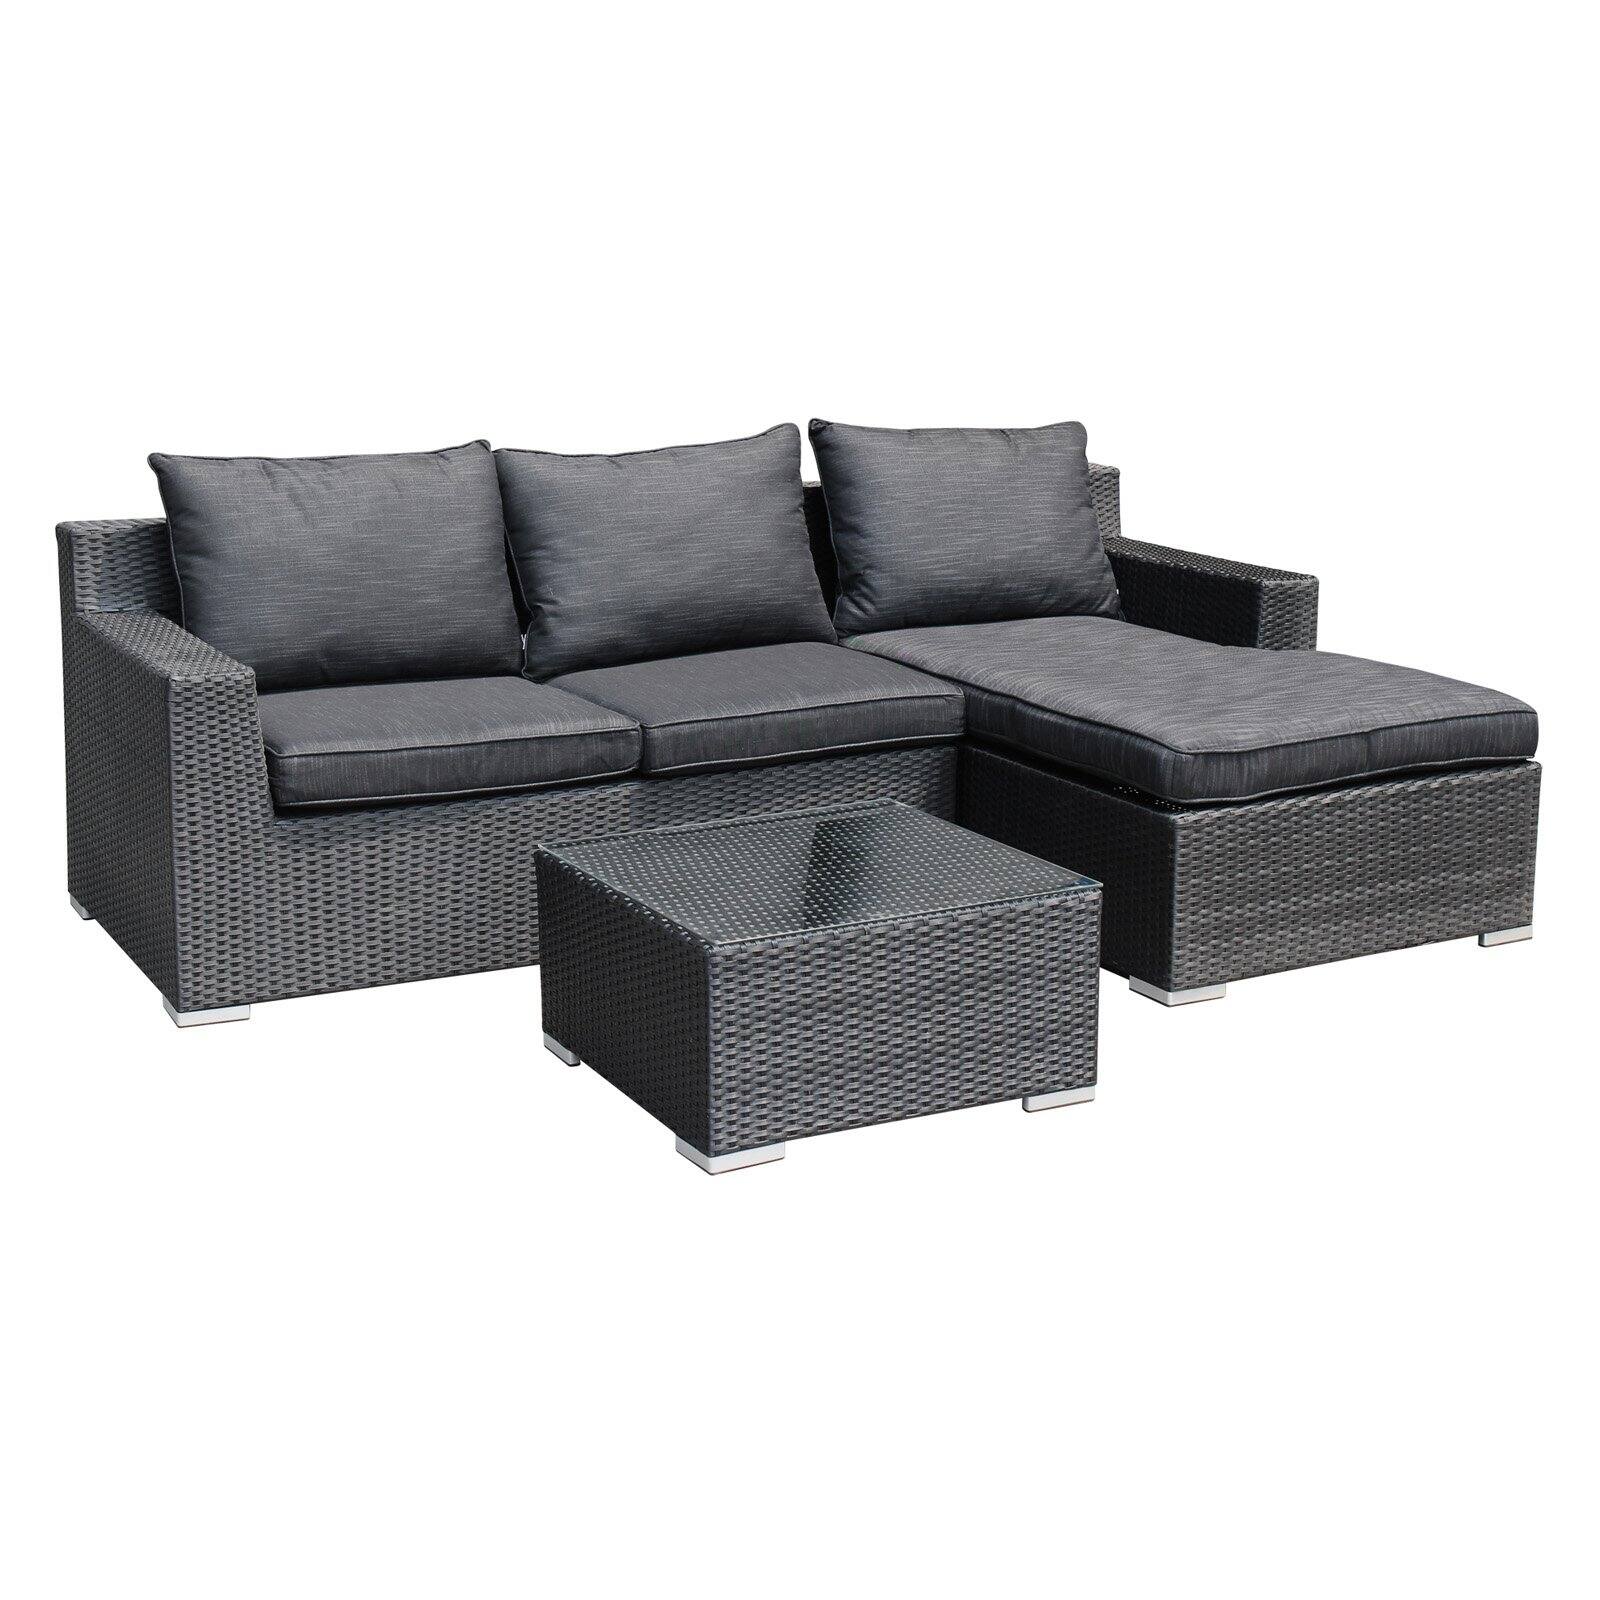 Magari Furniture Complete Outdoor Resin Wicker 3 Piece Patio Conversation Set - image 3 of 7